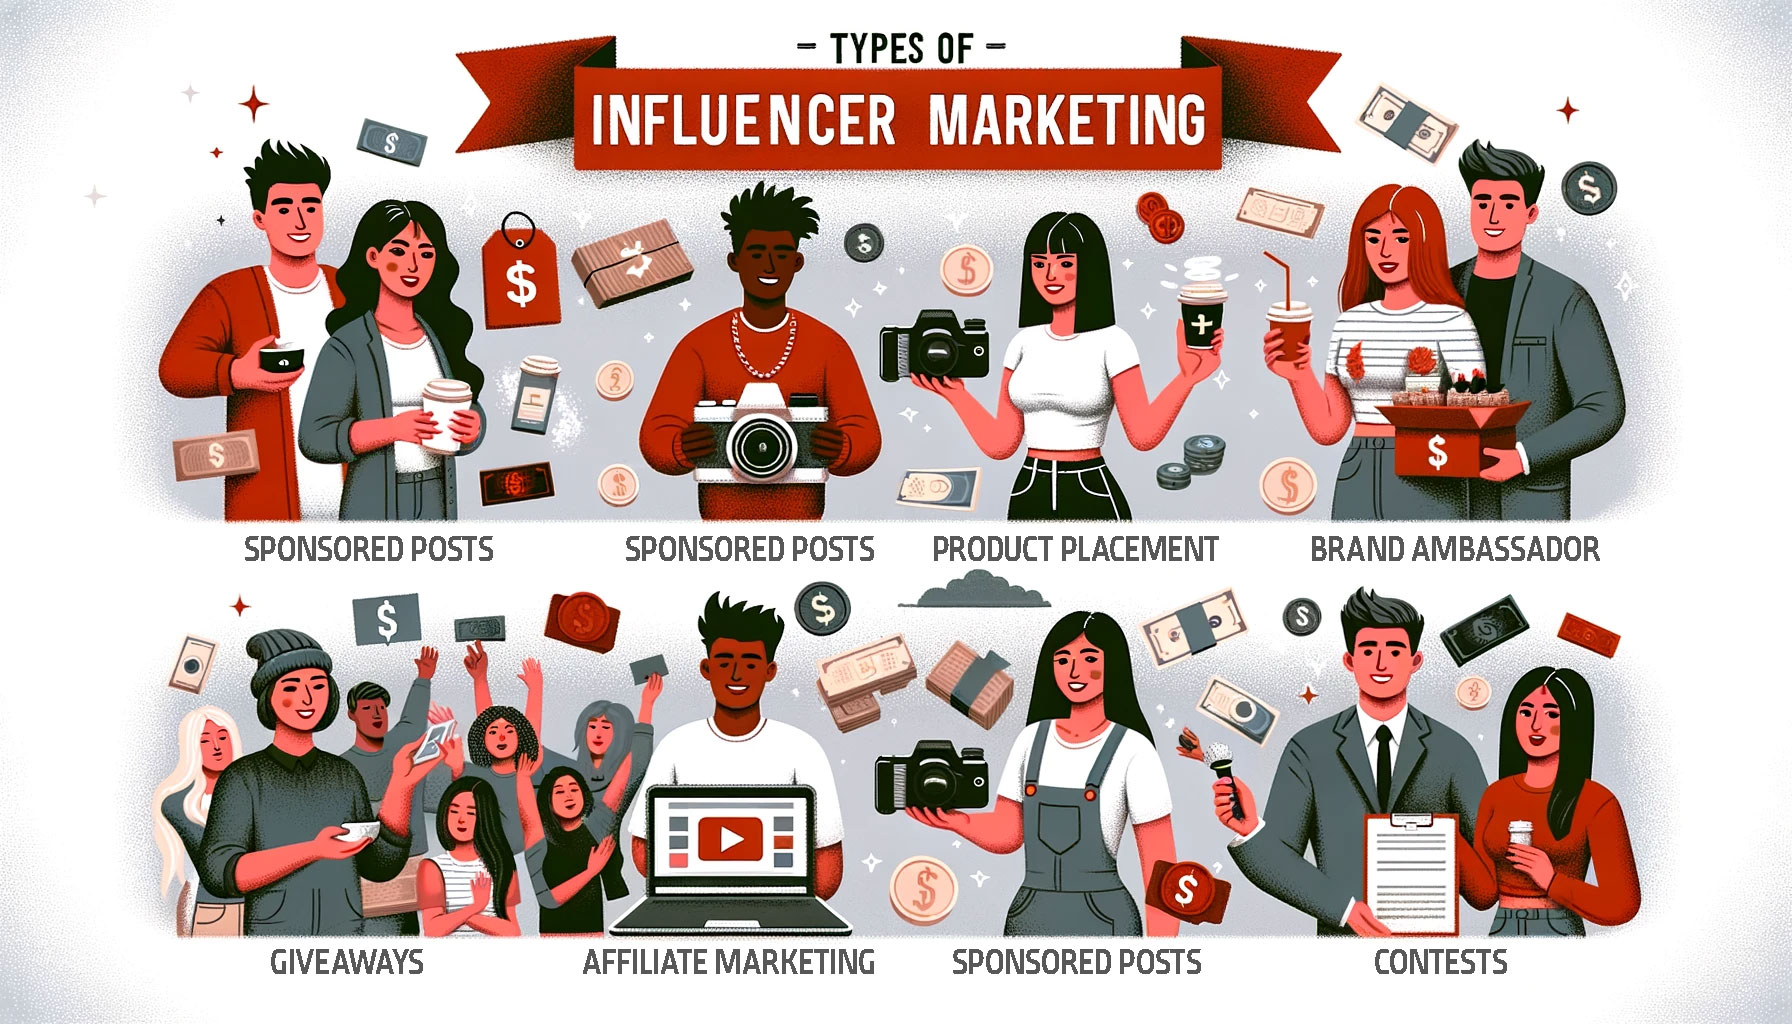 Types of Influencer Marketing